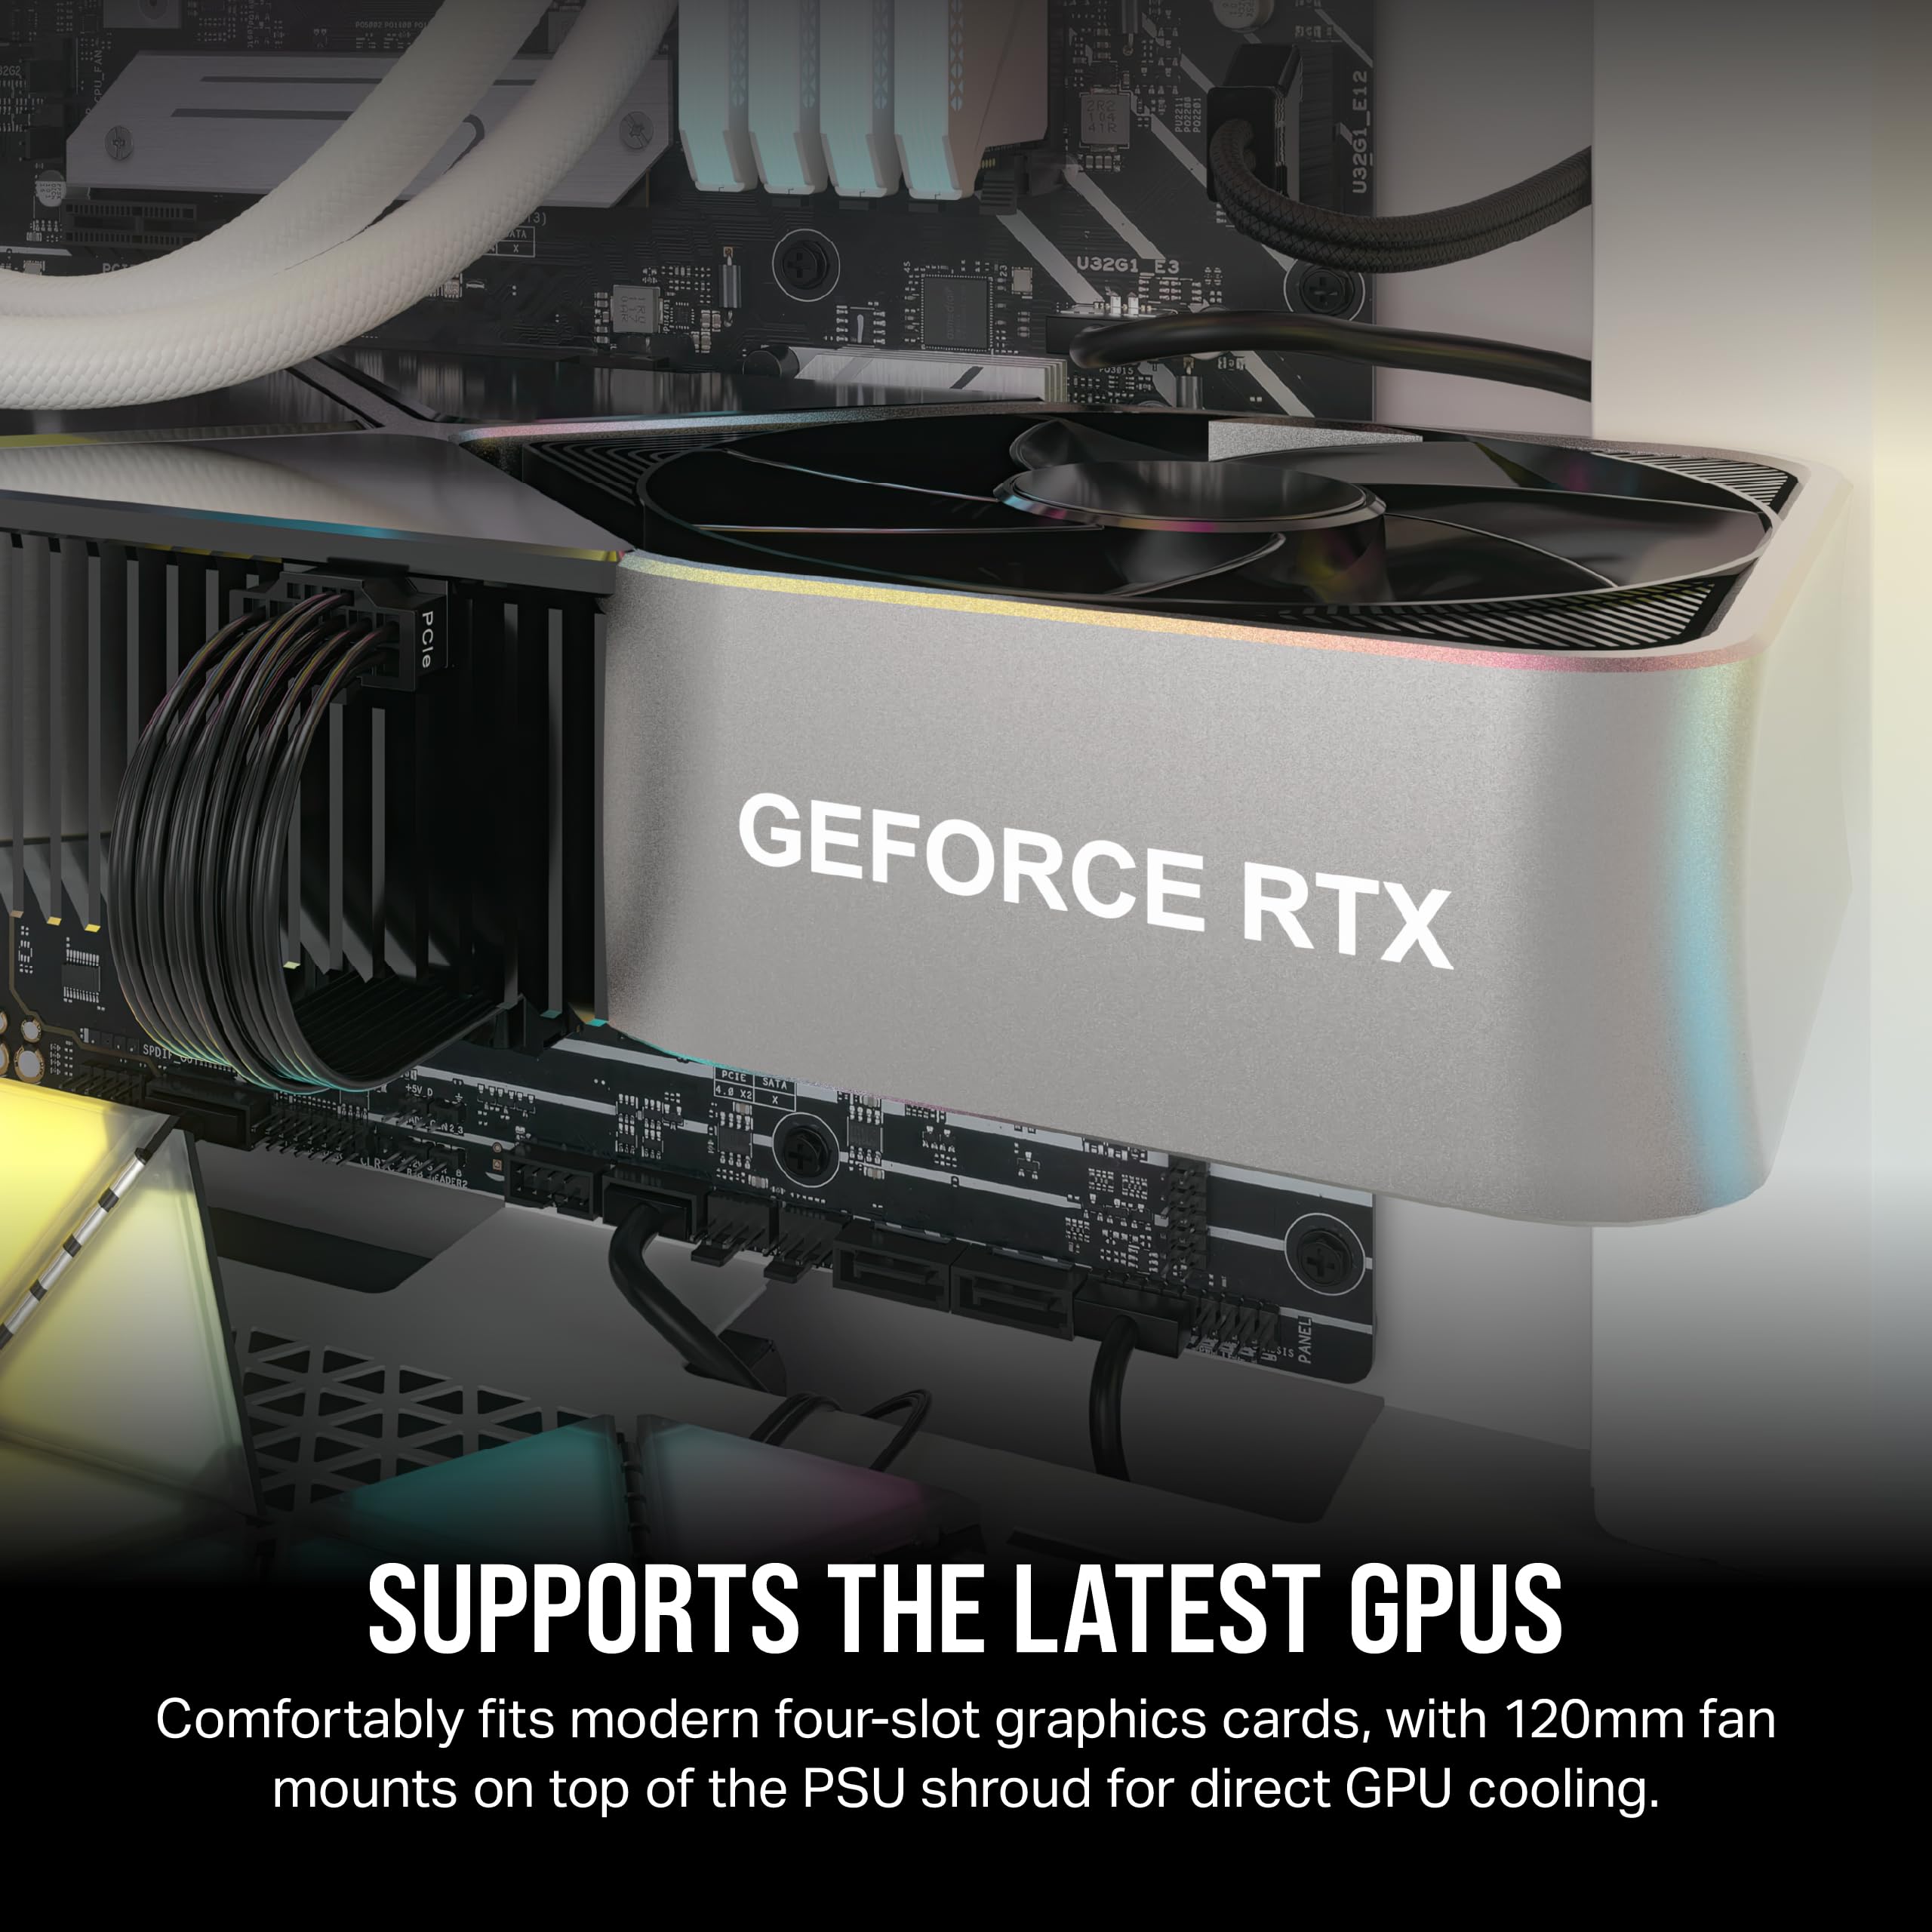 Corsair 3000D Airflow Mid-Tower PC Case – 2X SP120 Elite Fans – Four-Slot GPU Support – Fits up to 8X 120mm Fans – High-Airflow Design – White